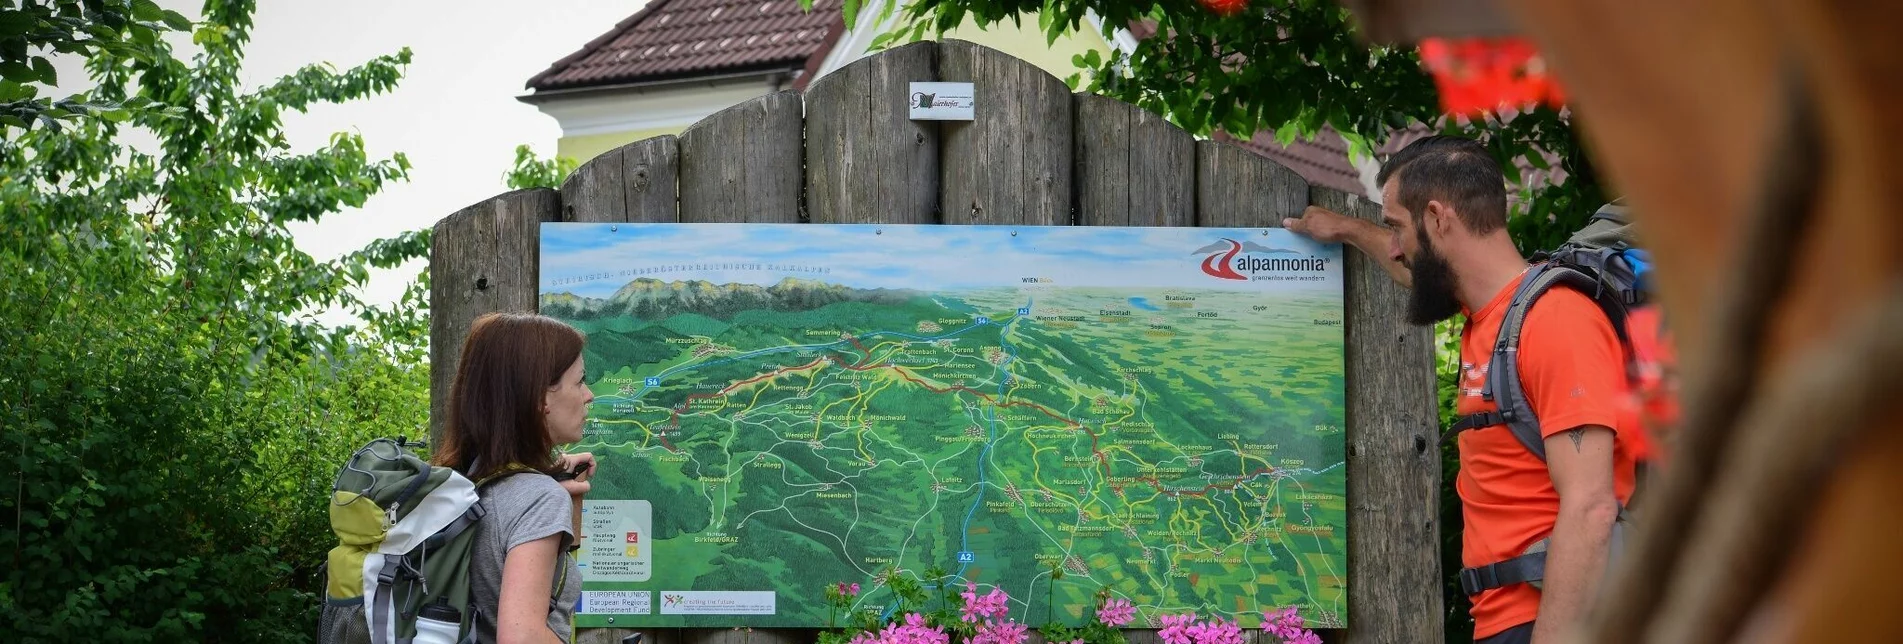 Hiking route alpannonia circular route - in Peter Rosegger's footsteps - Touren-Impression #1 | © Region Joglland - Waldheimat